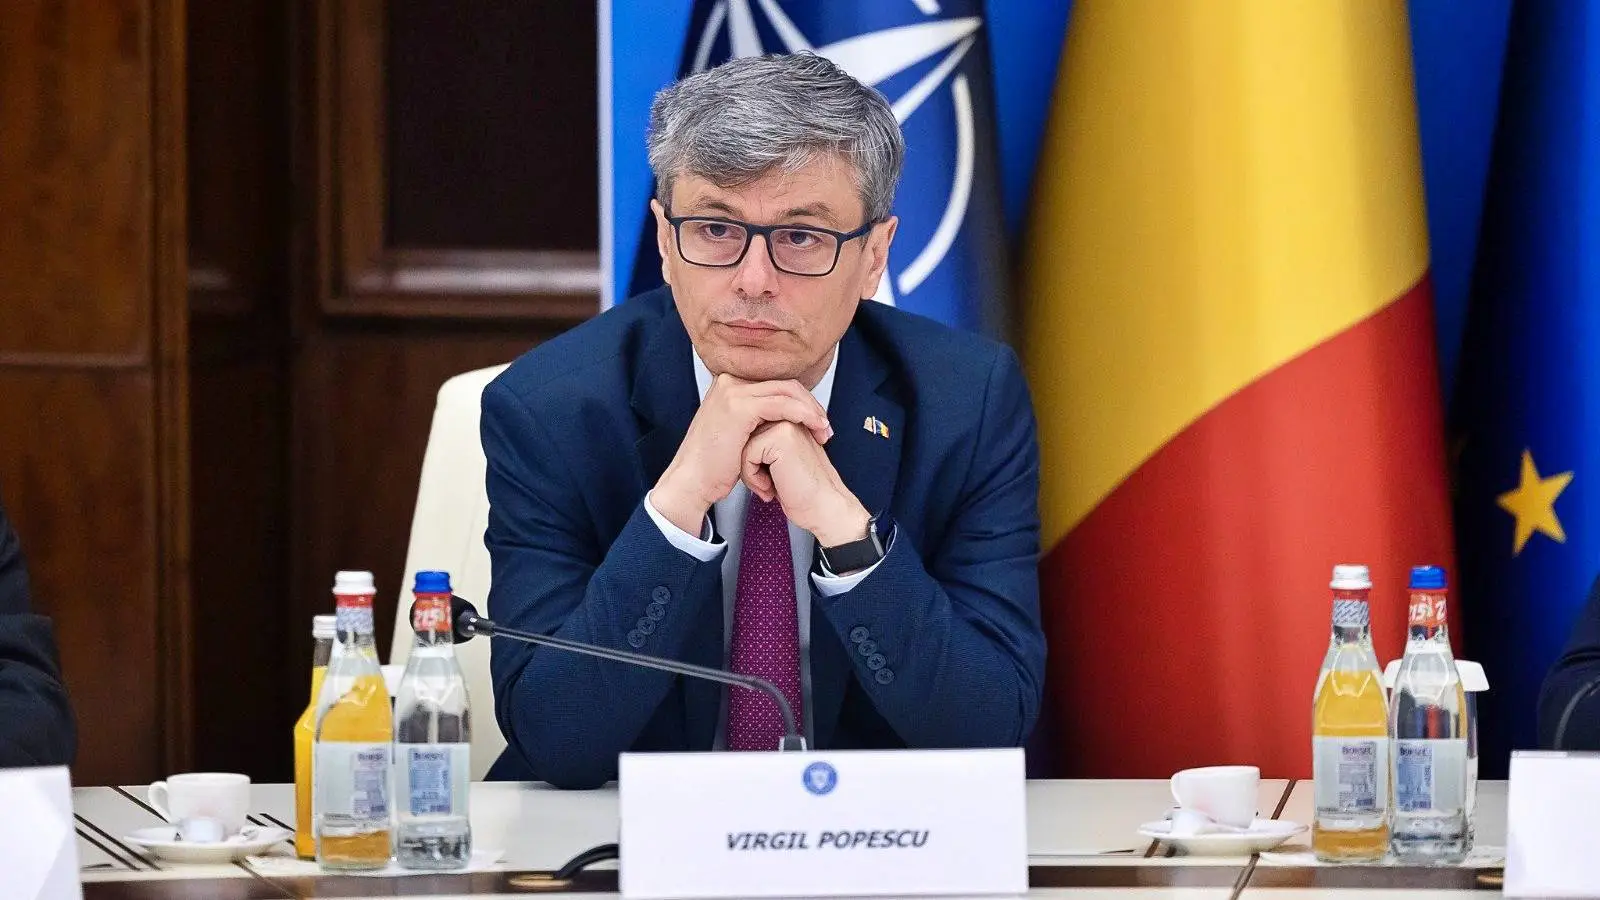 Ministrul Energiei IMPORTANTE Decizii Gazele Naturale Romania Decise Nivel European